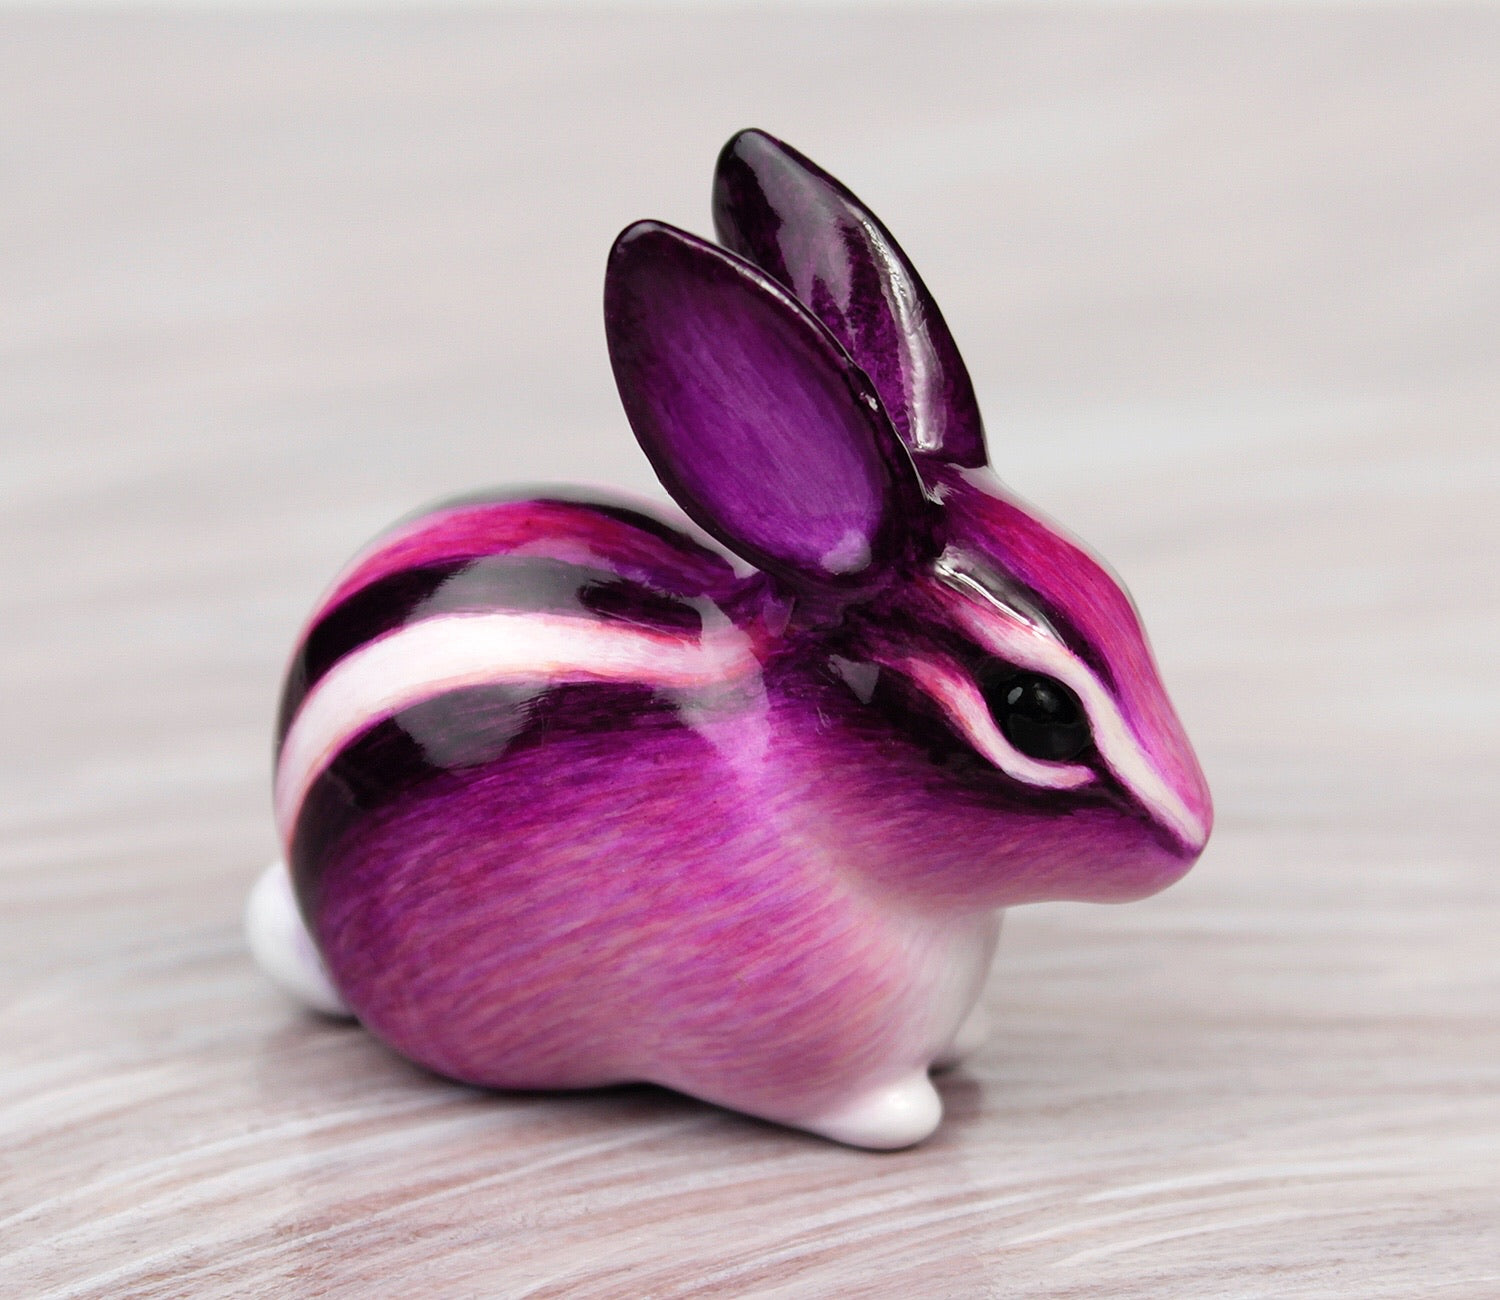 Purple chipmunk rabbit